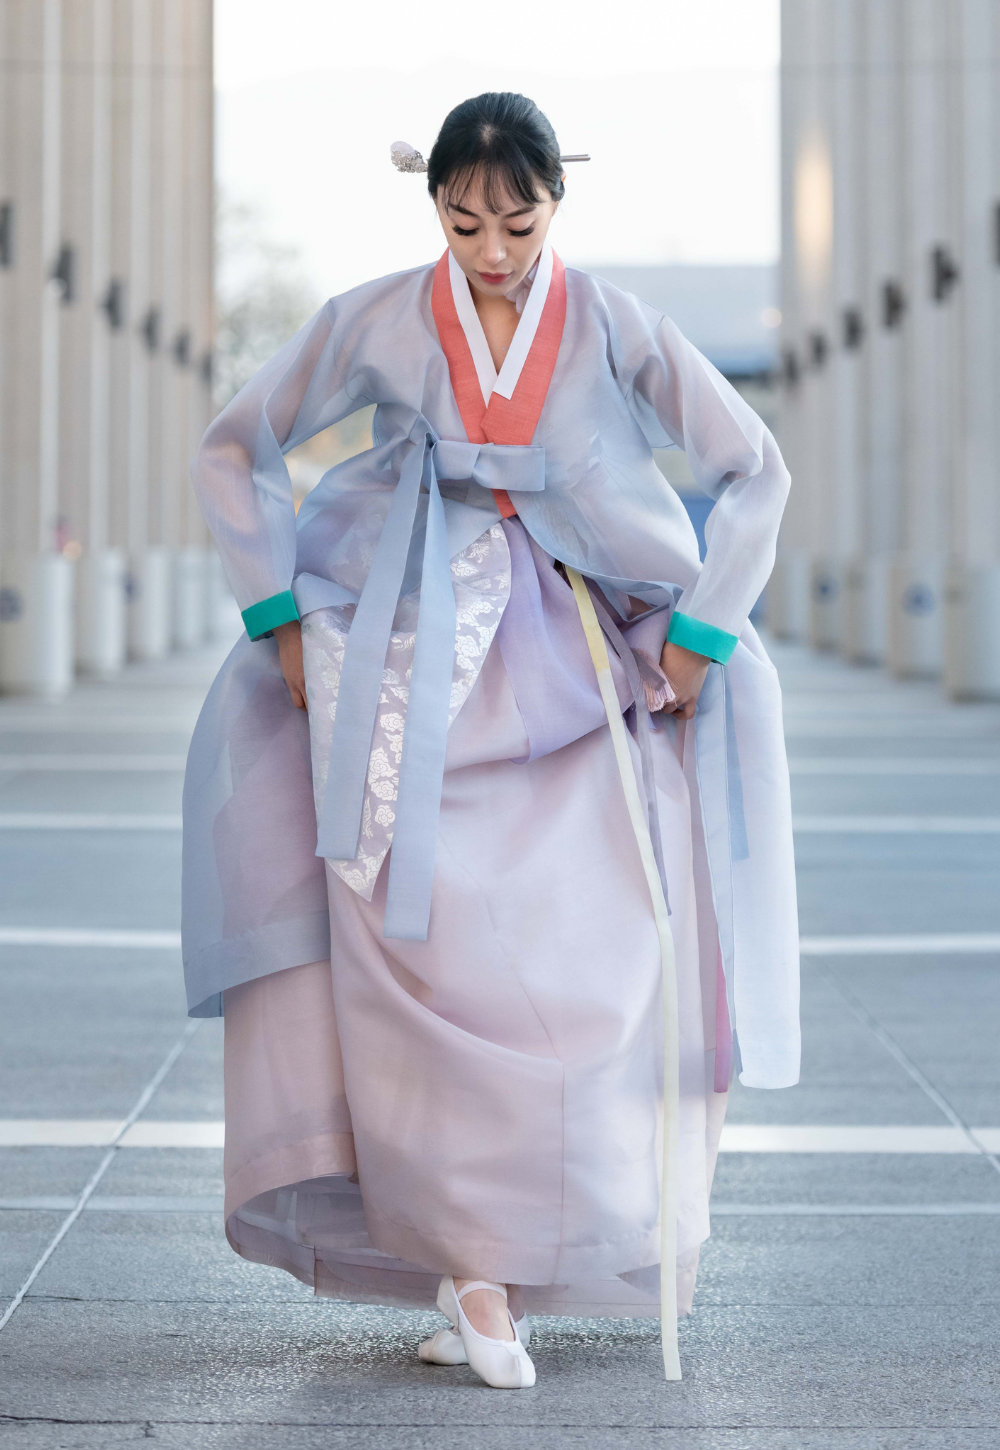 Bride hanbok at traditional Korean wedding | Korean traditional dress, Korea  dress, Korean wedding dress